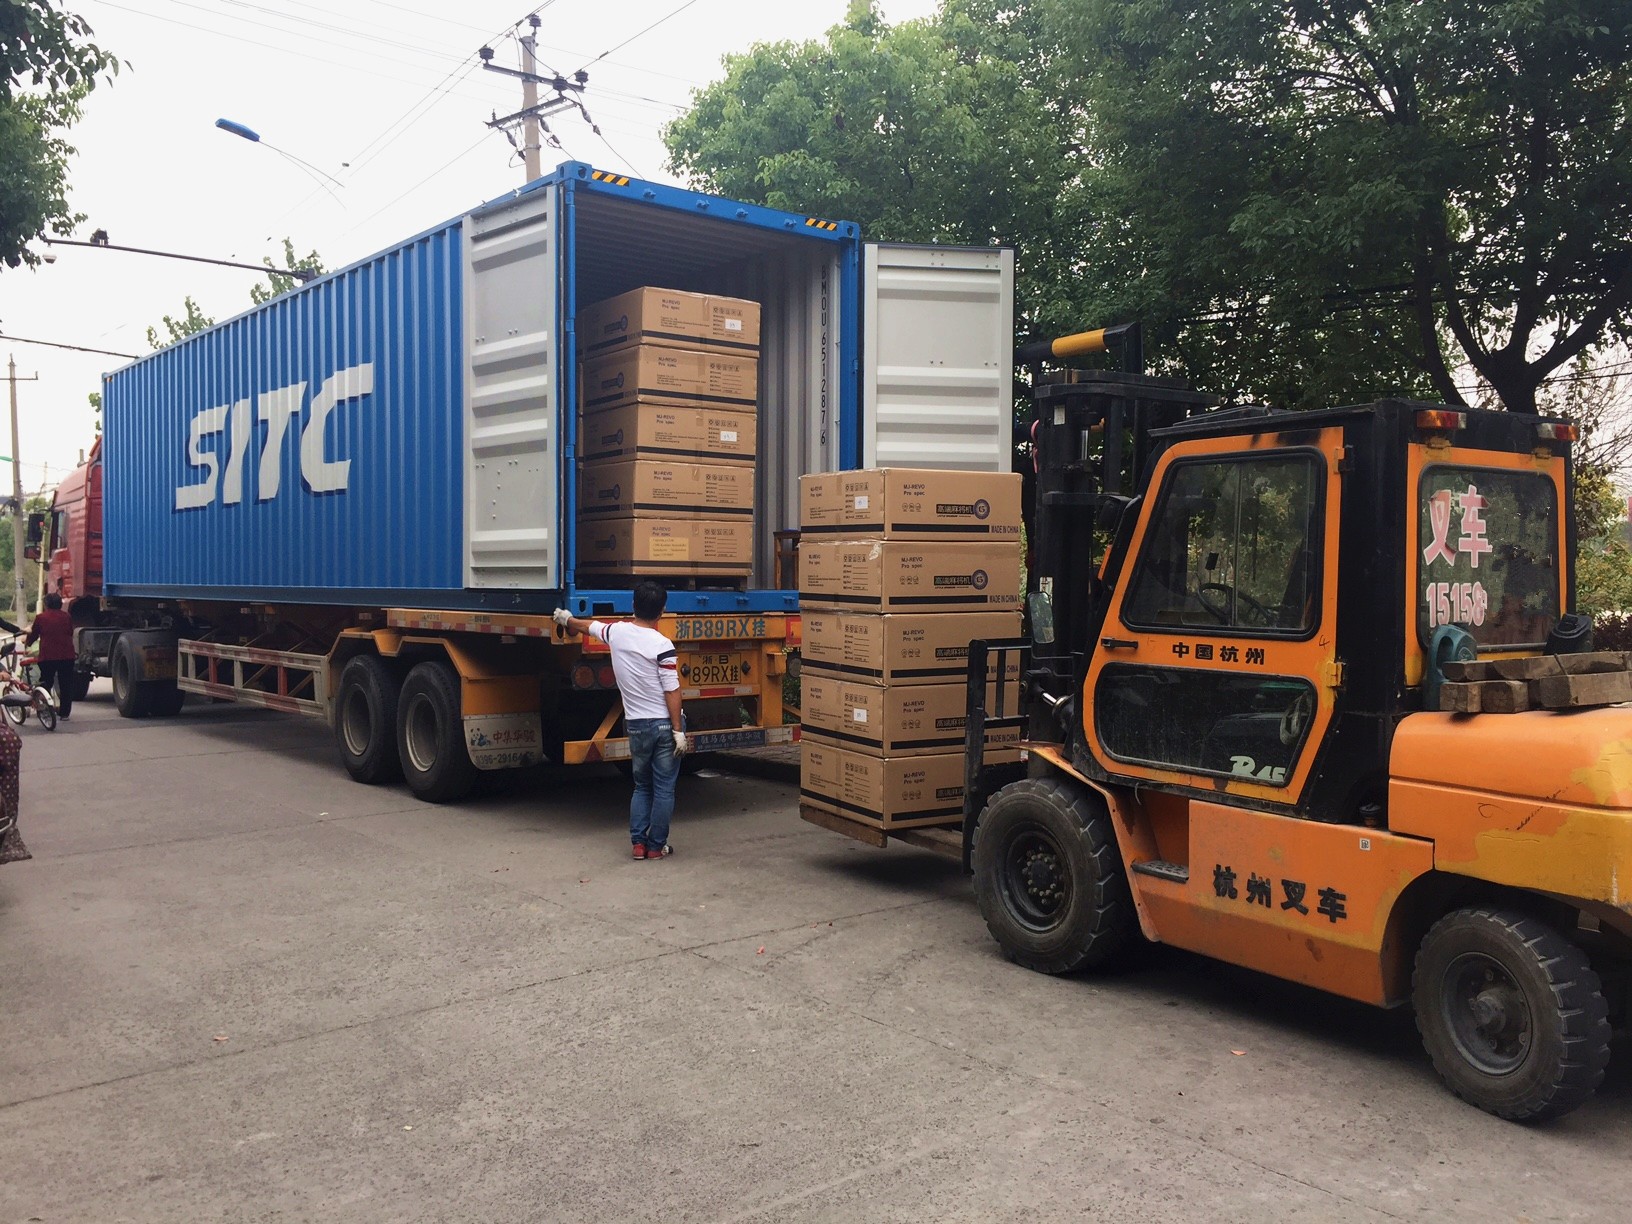 Global Logistics Services